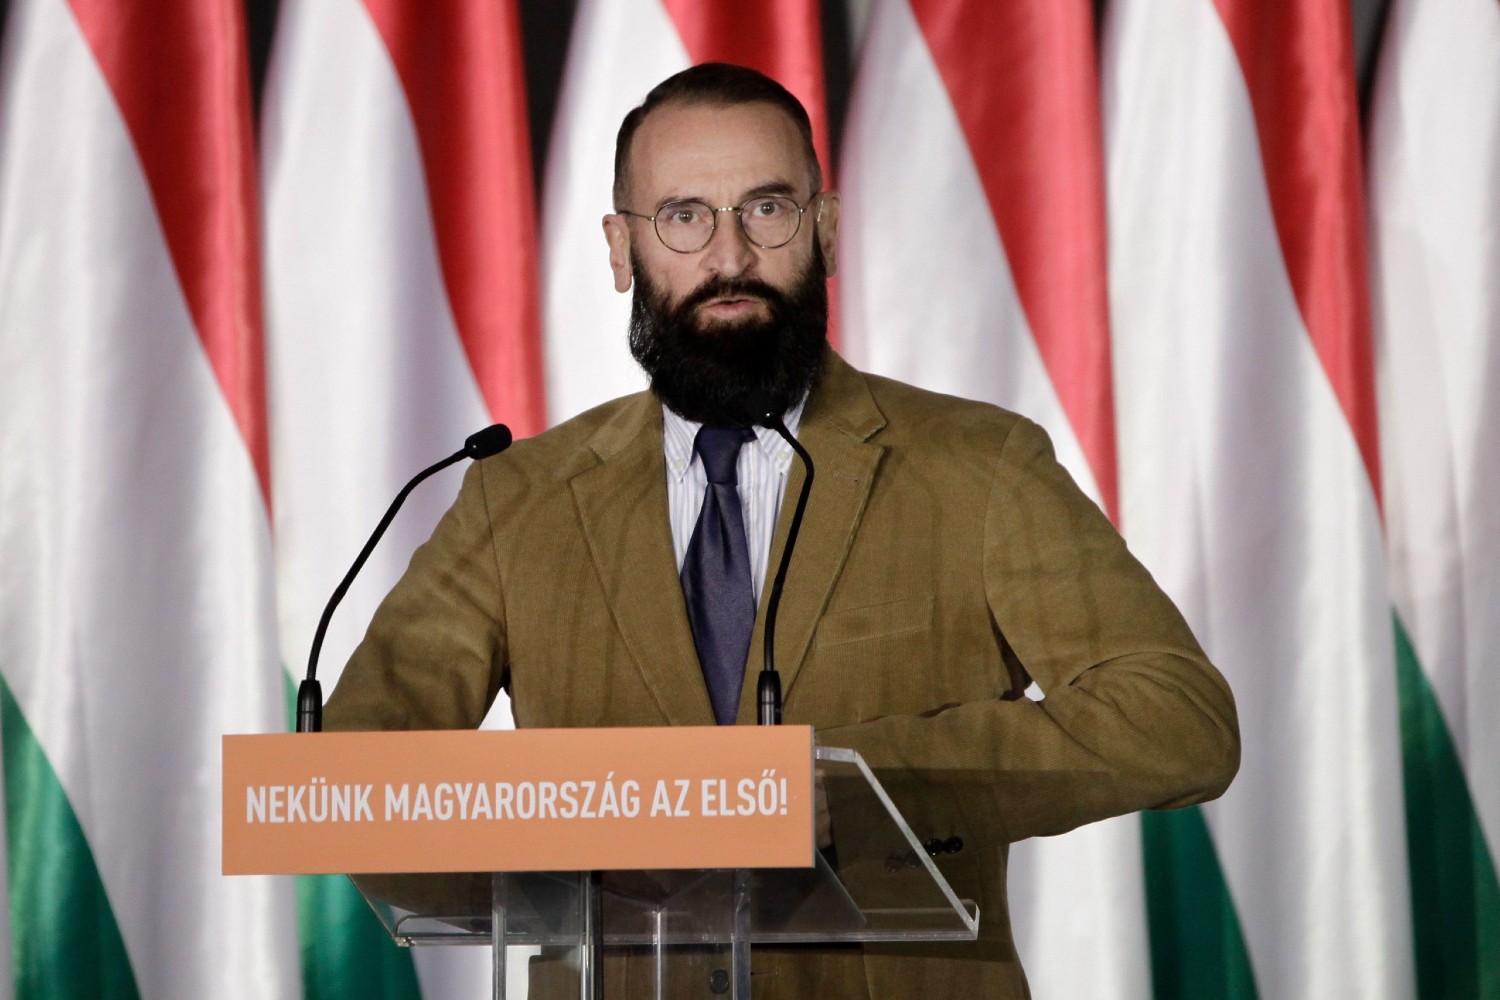 Mađarski političar seks na jahti